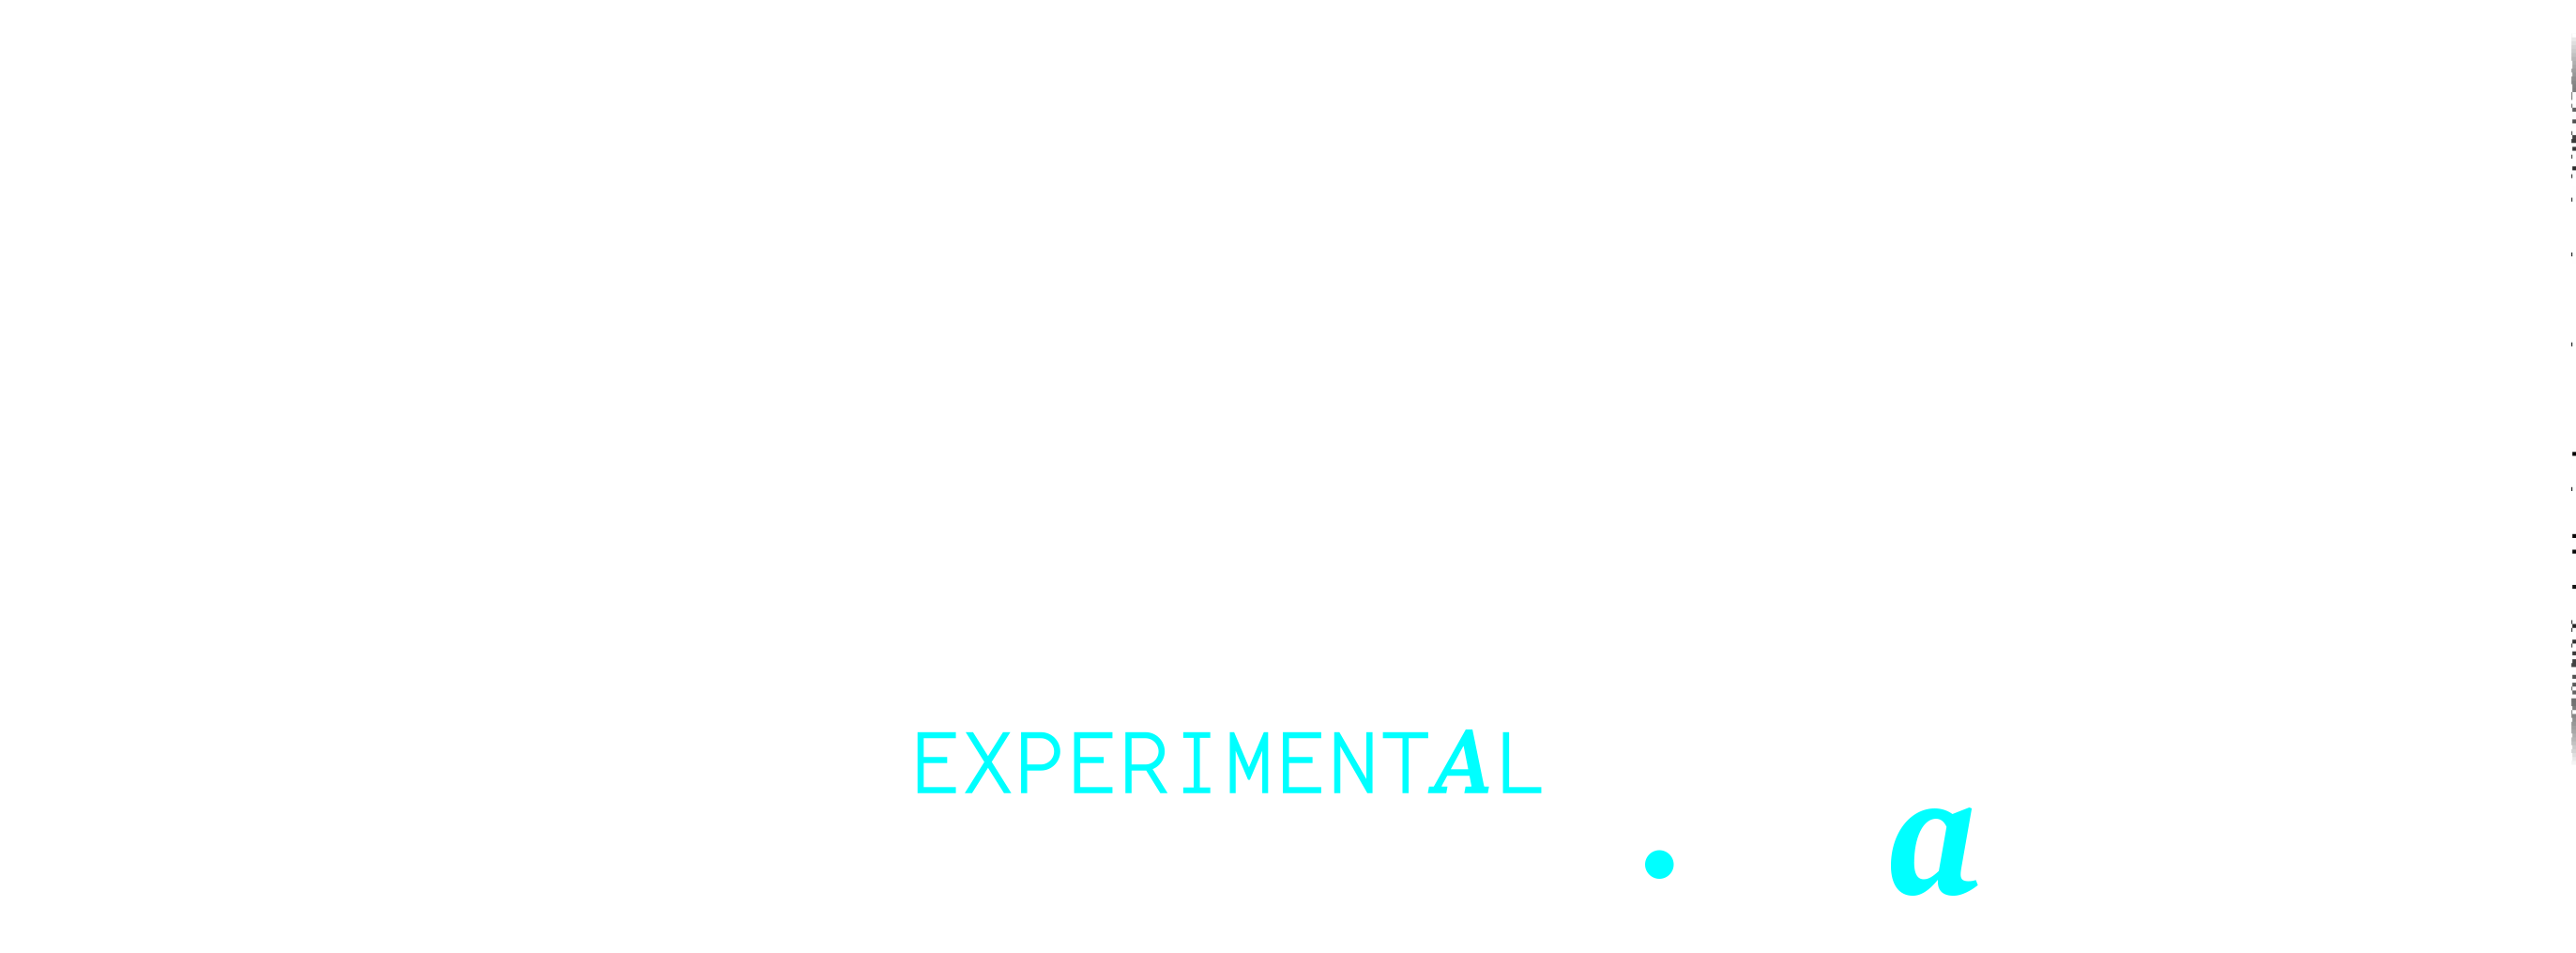 Efemero Festival